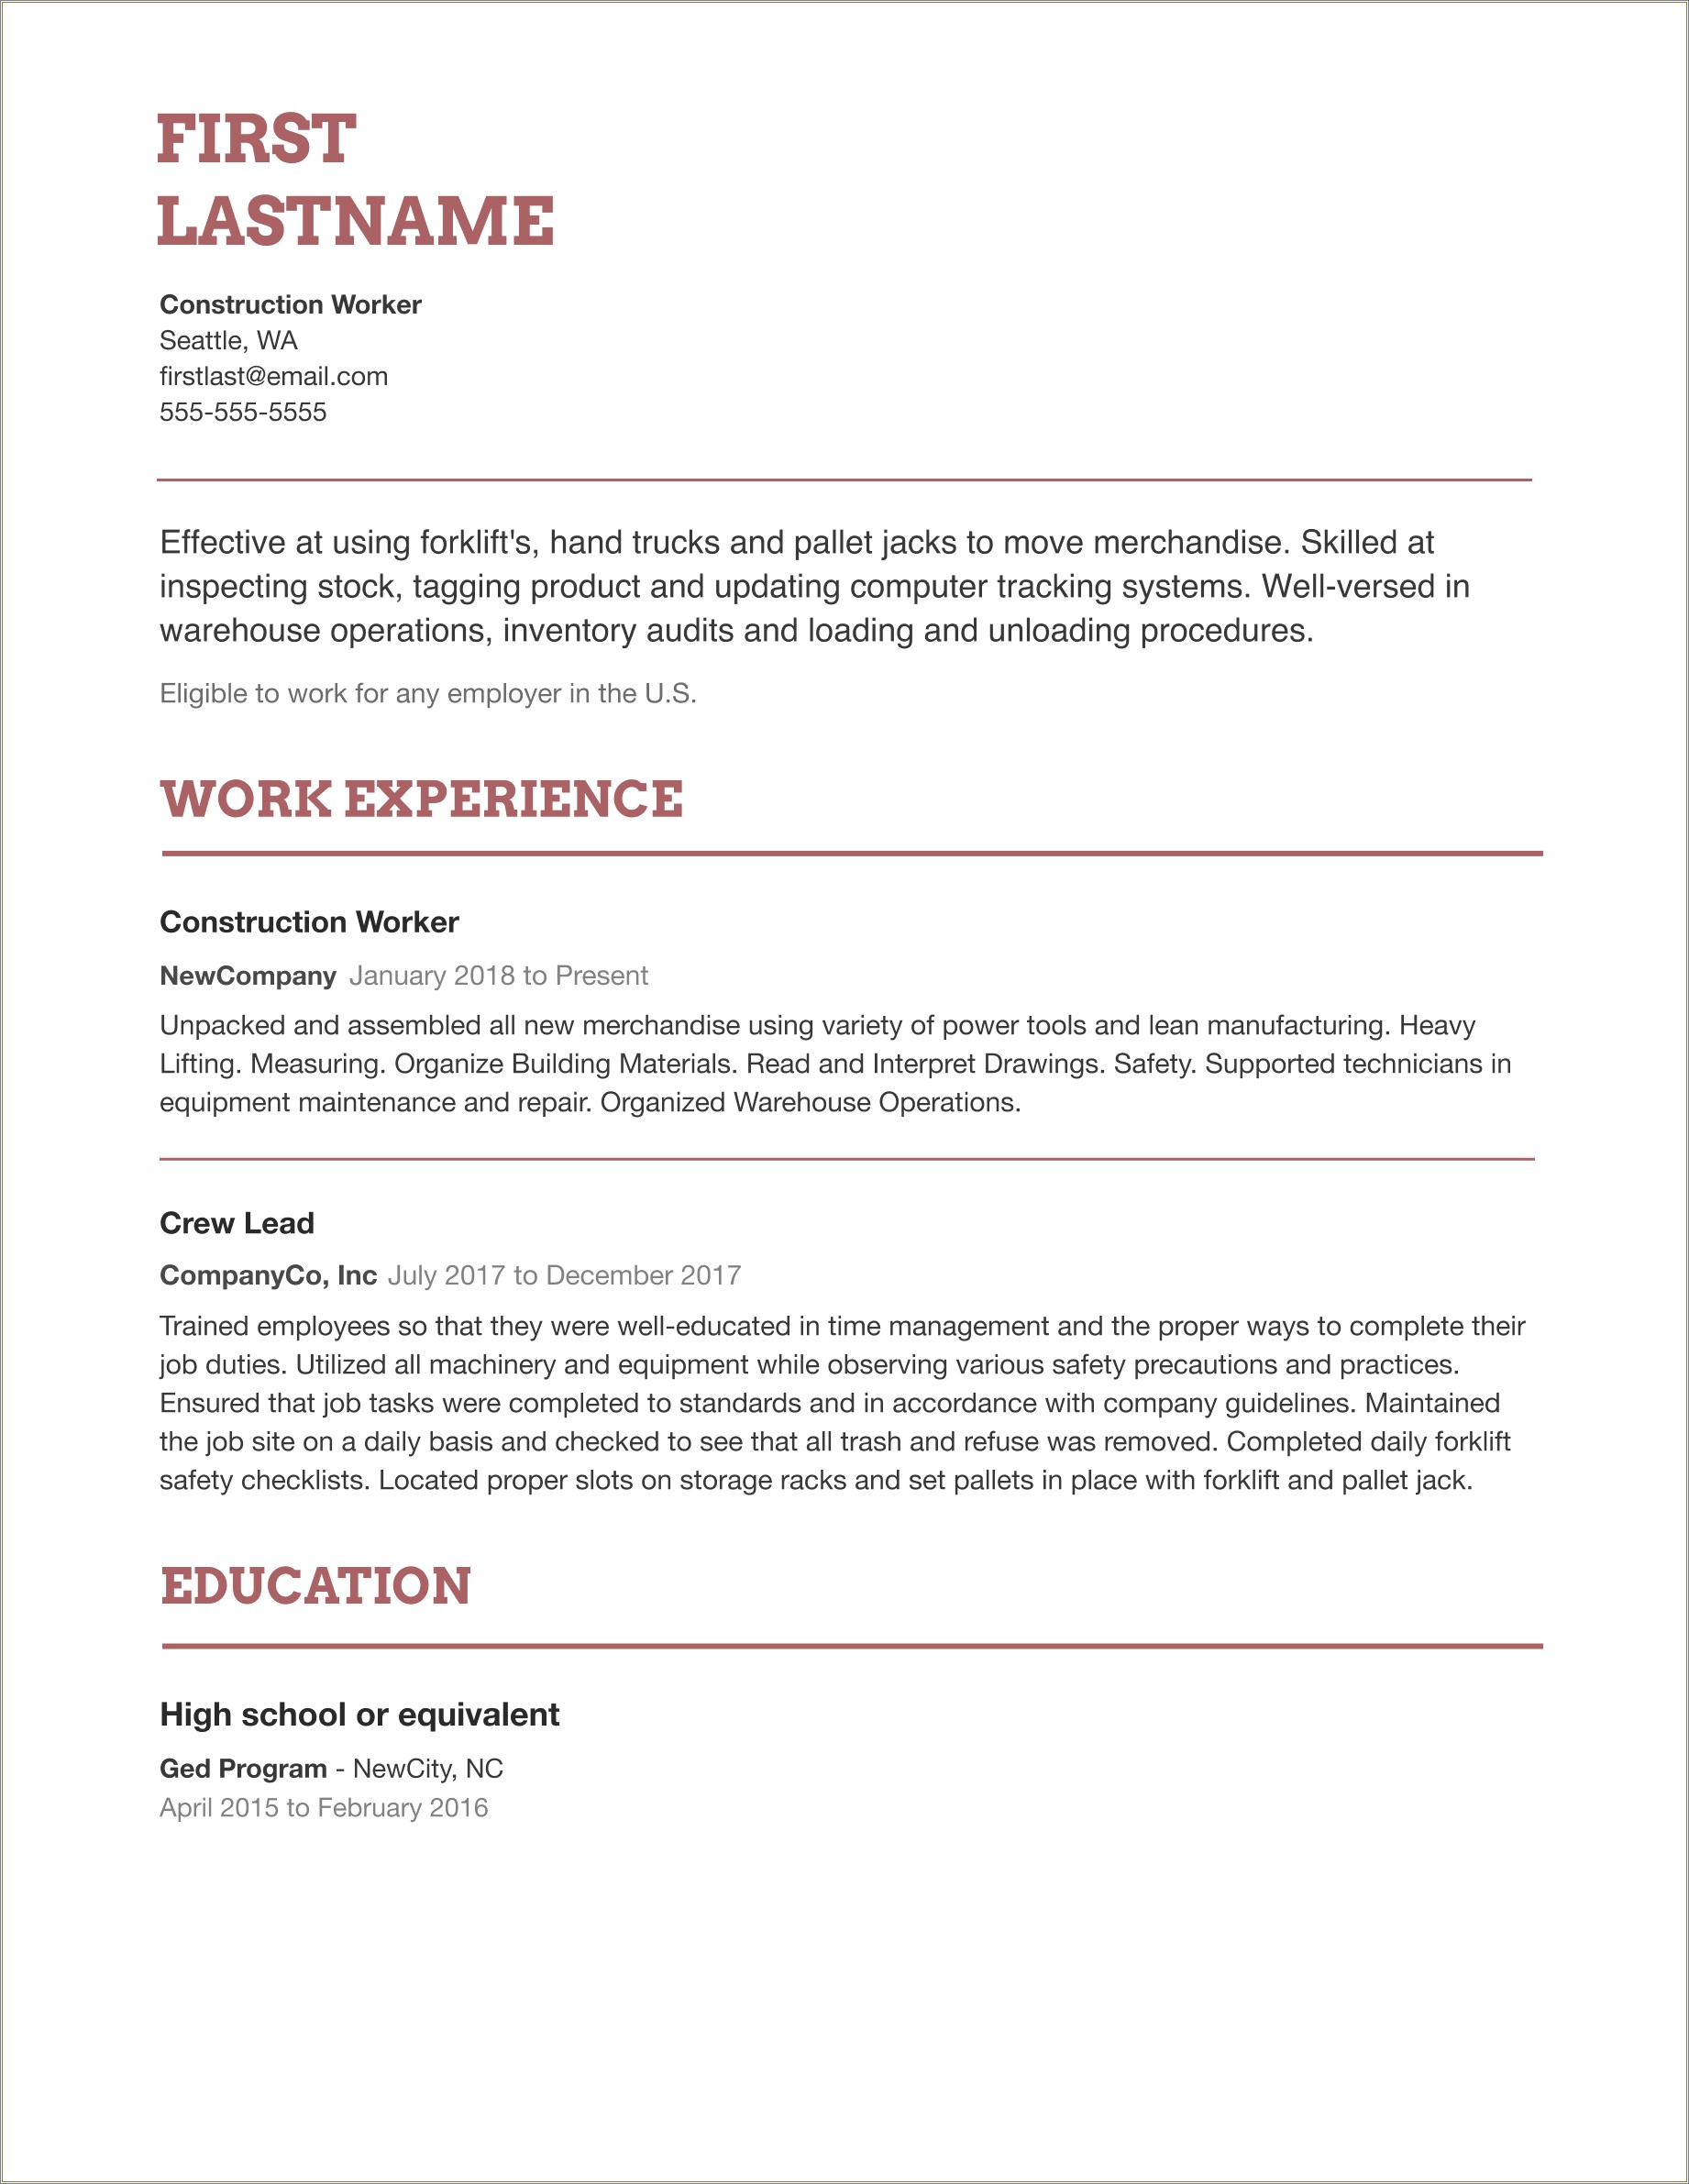 Website To Compare Resume To Job Description